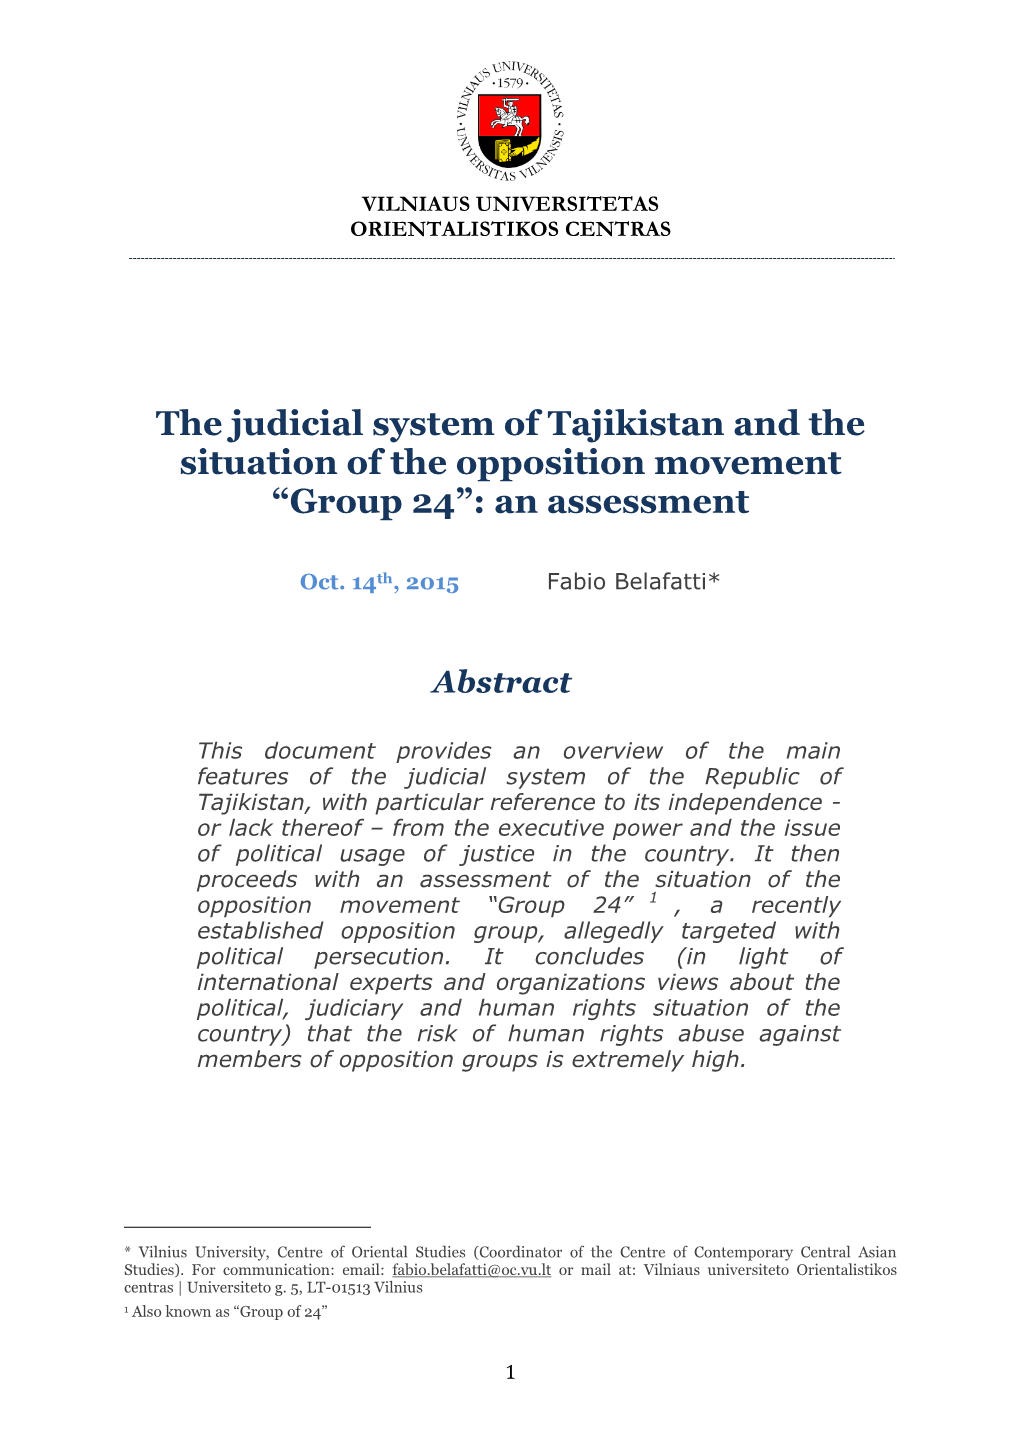 The Judicial System in Tajikistan